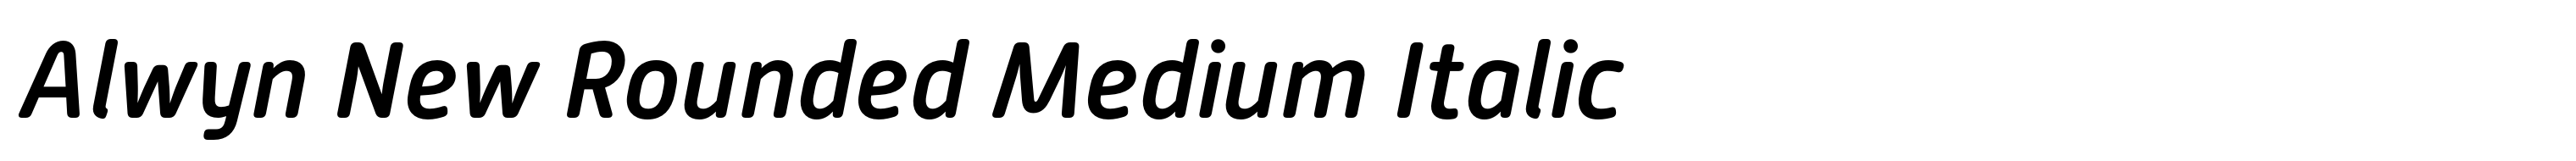 Alwyn New Rounded Medium Italic